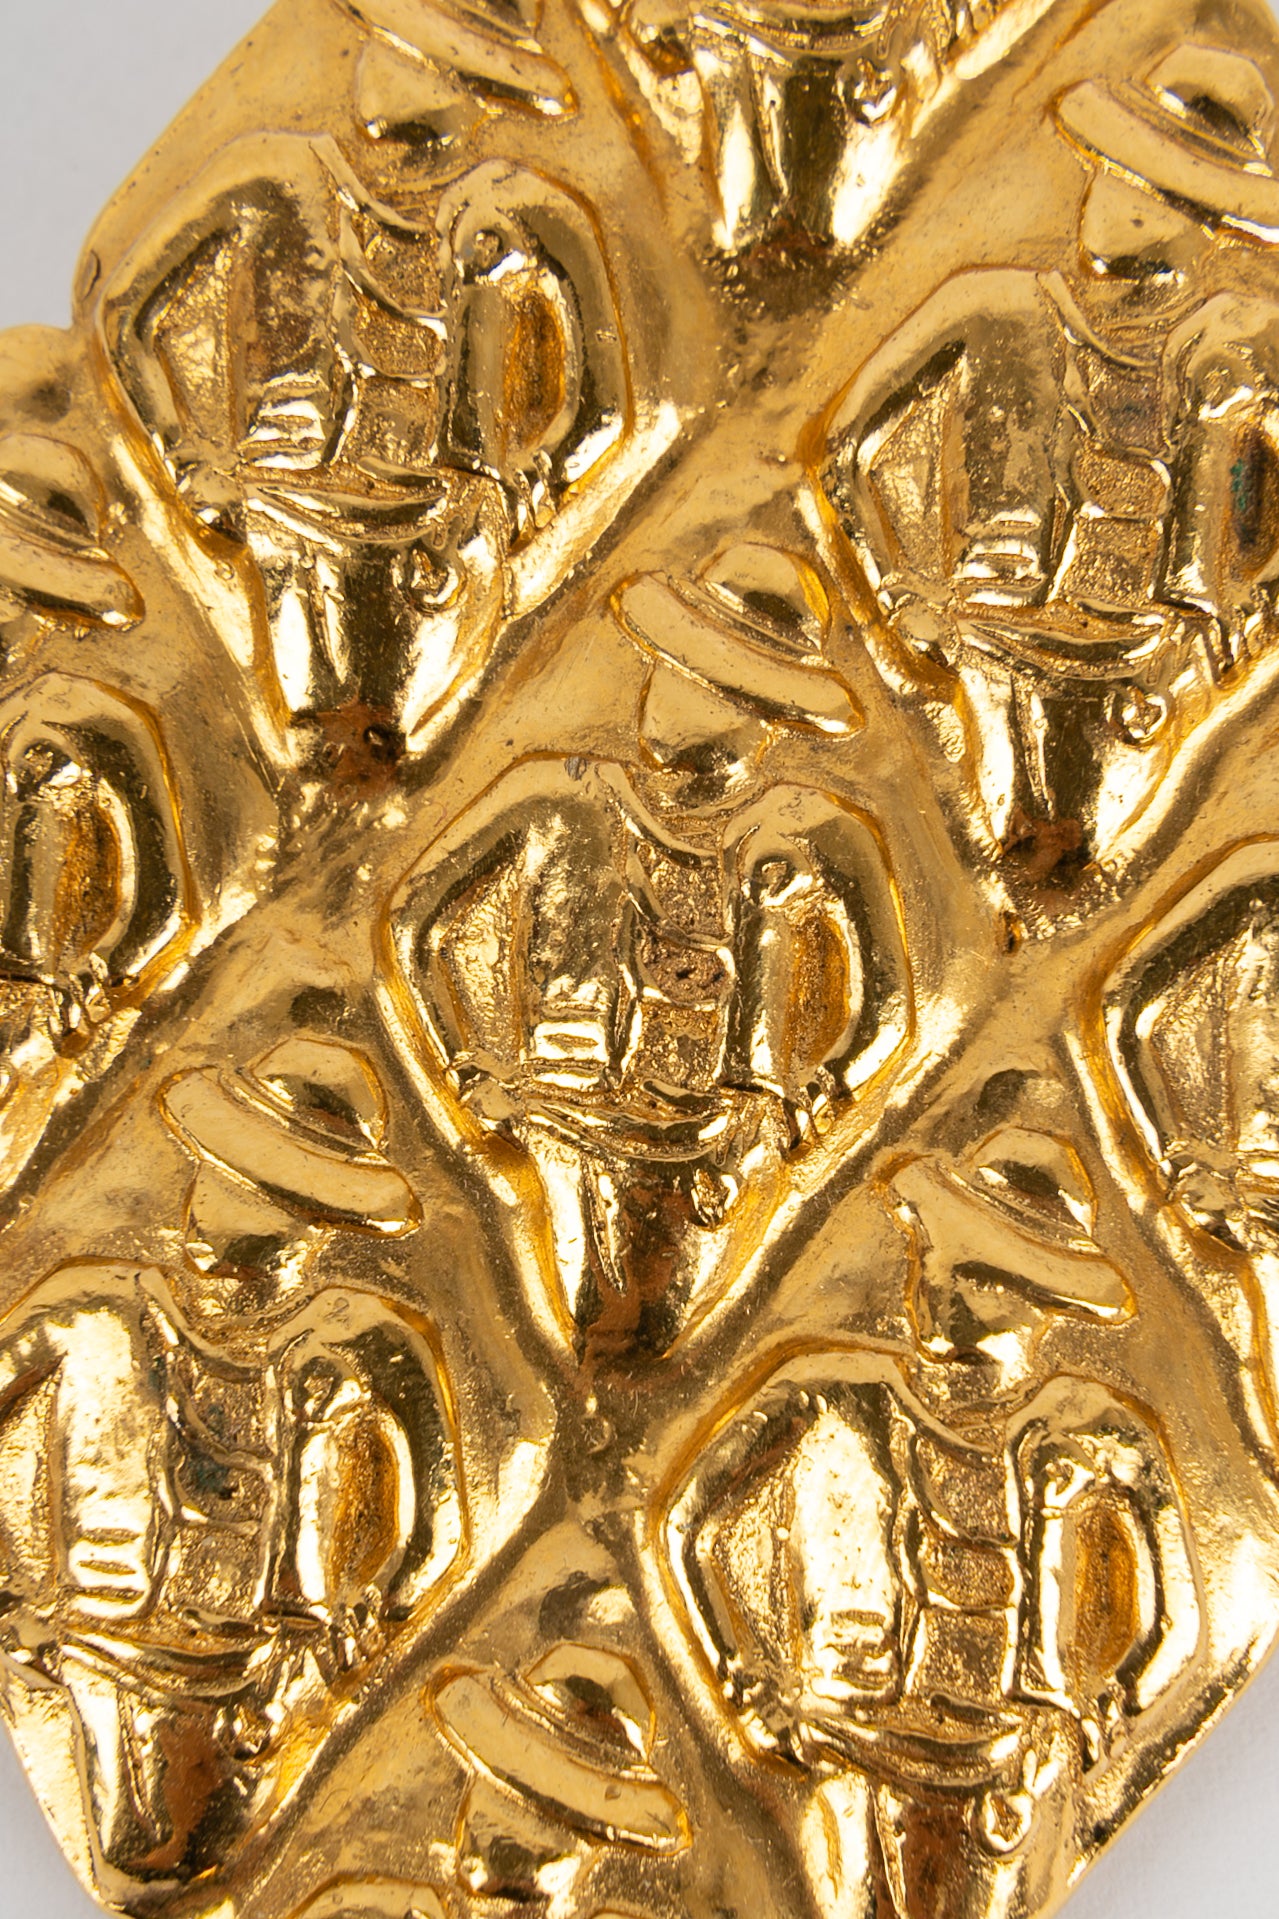 Broche dorée Chanel